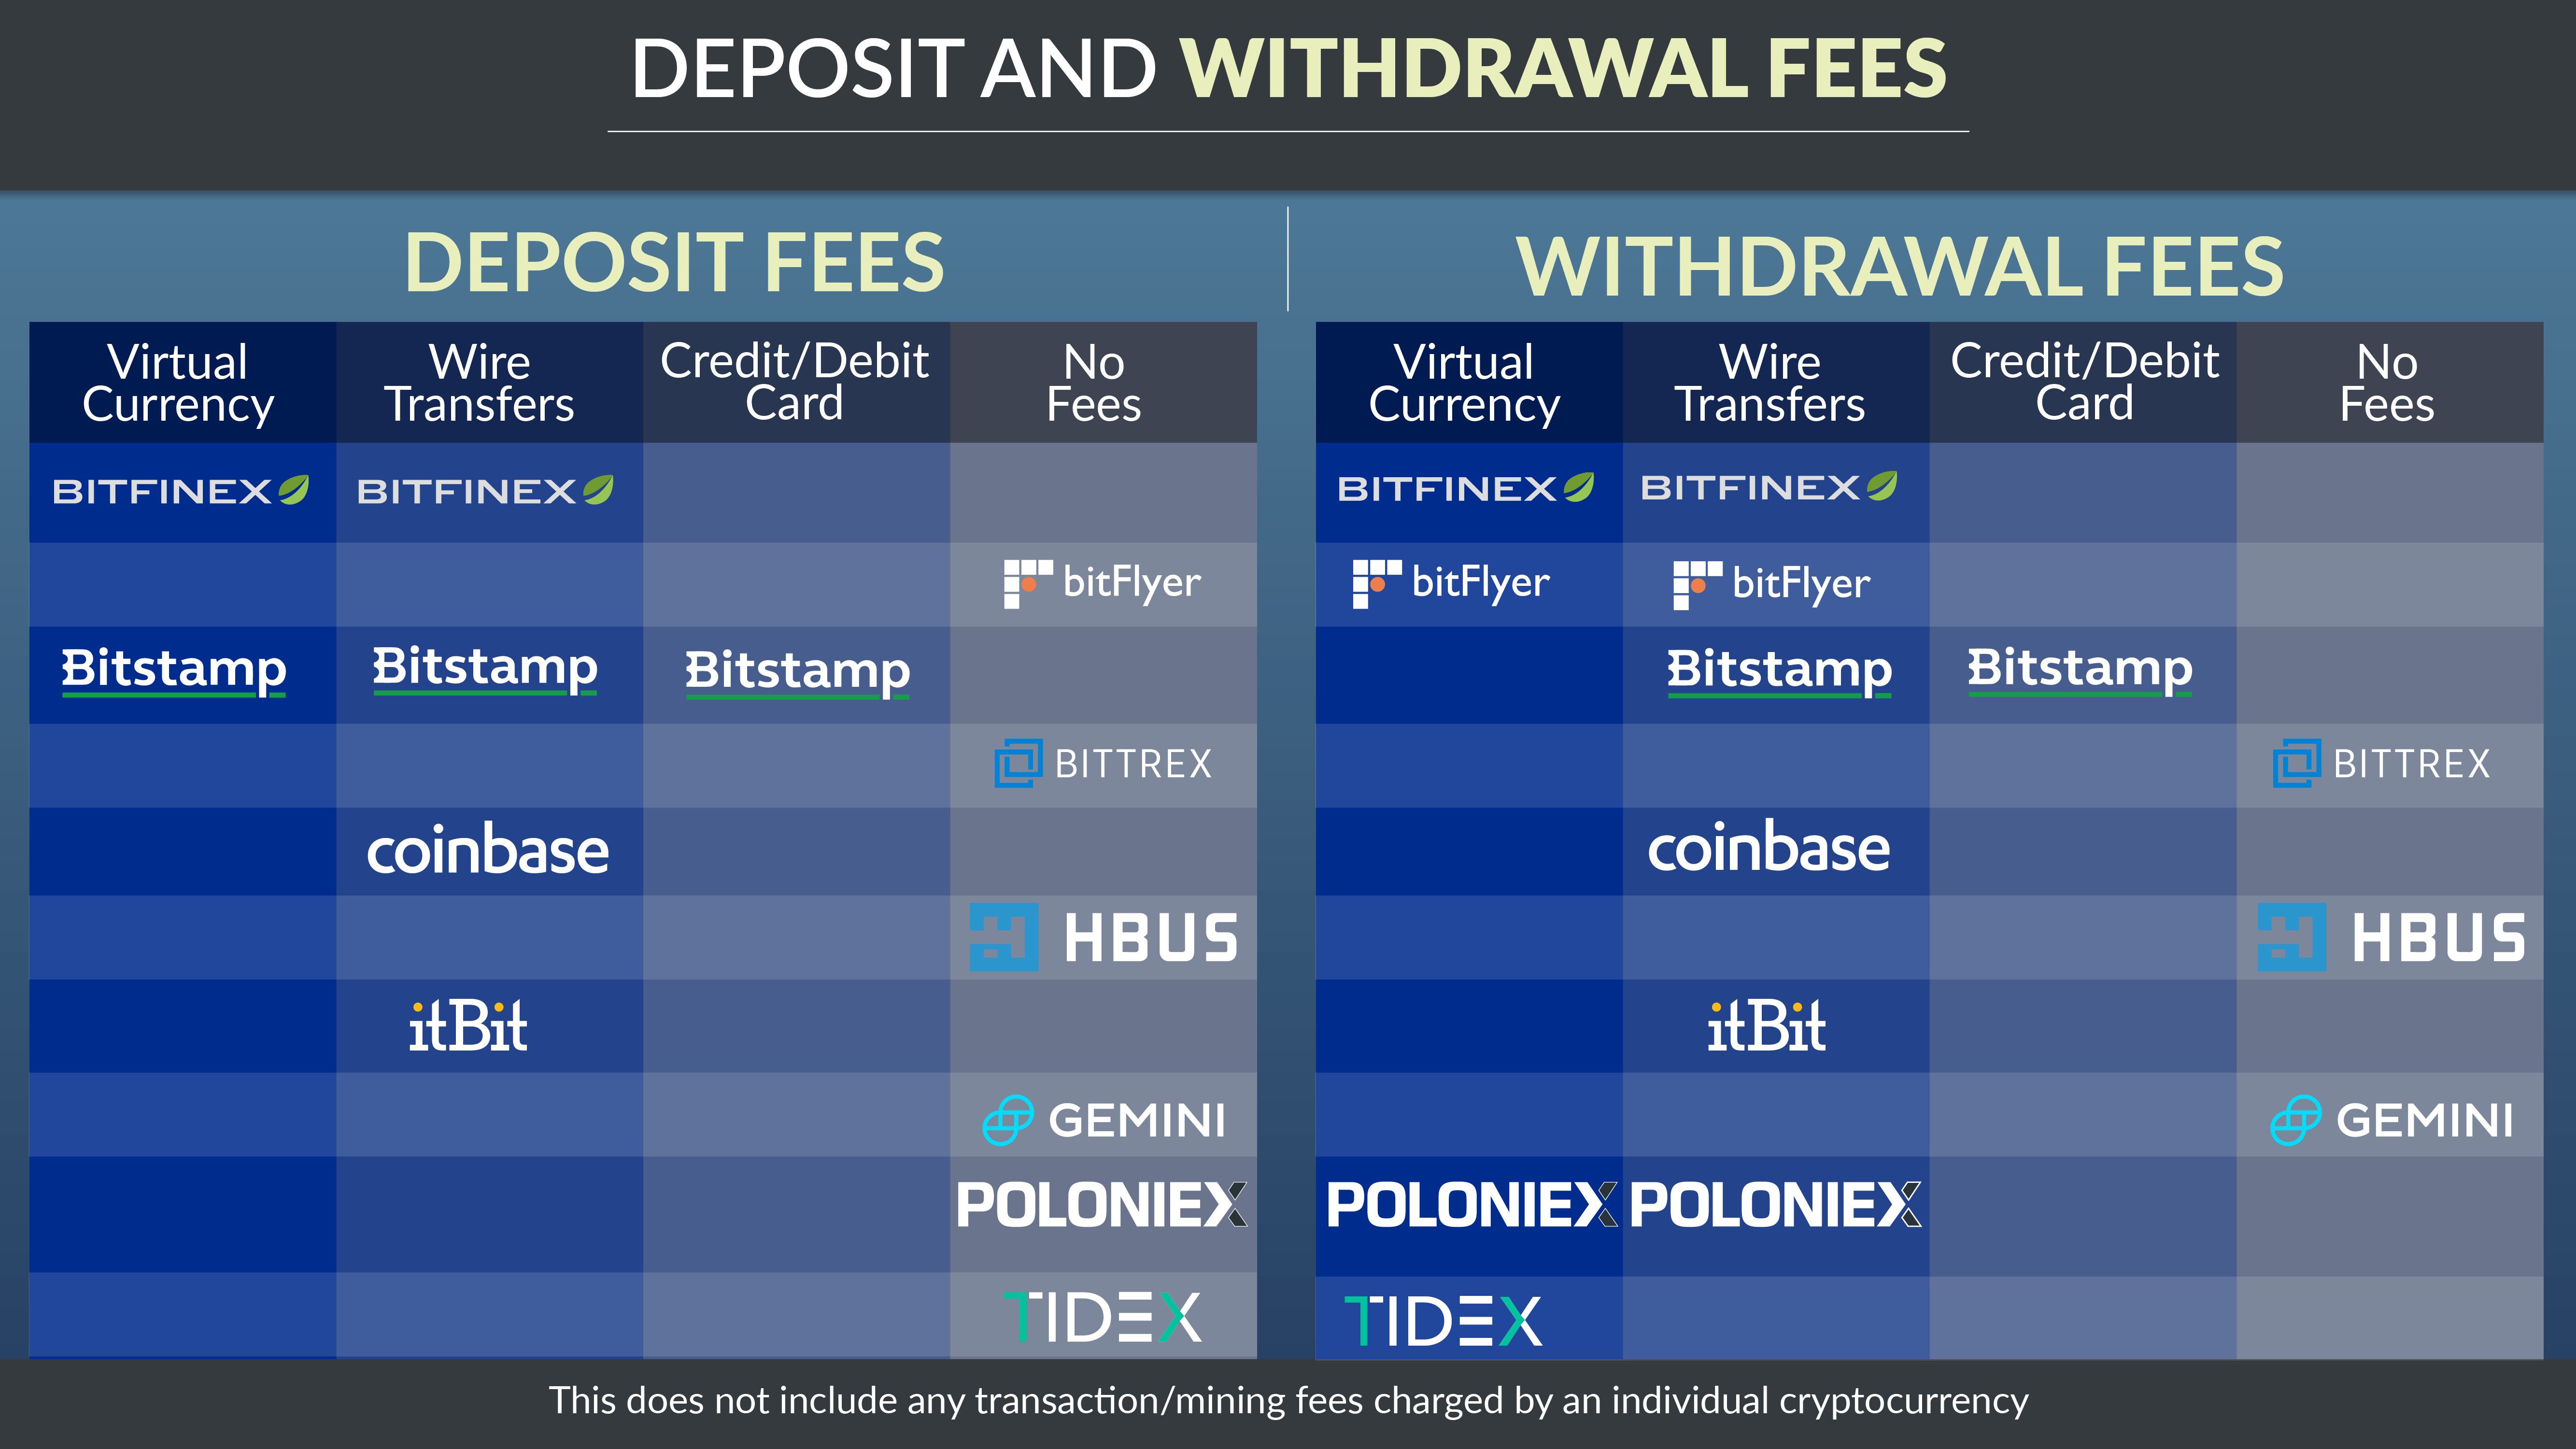 Deposit and Withdrawal Fees